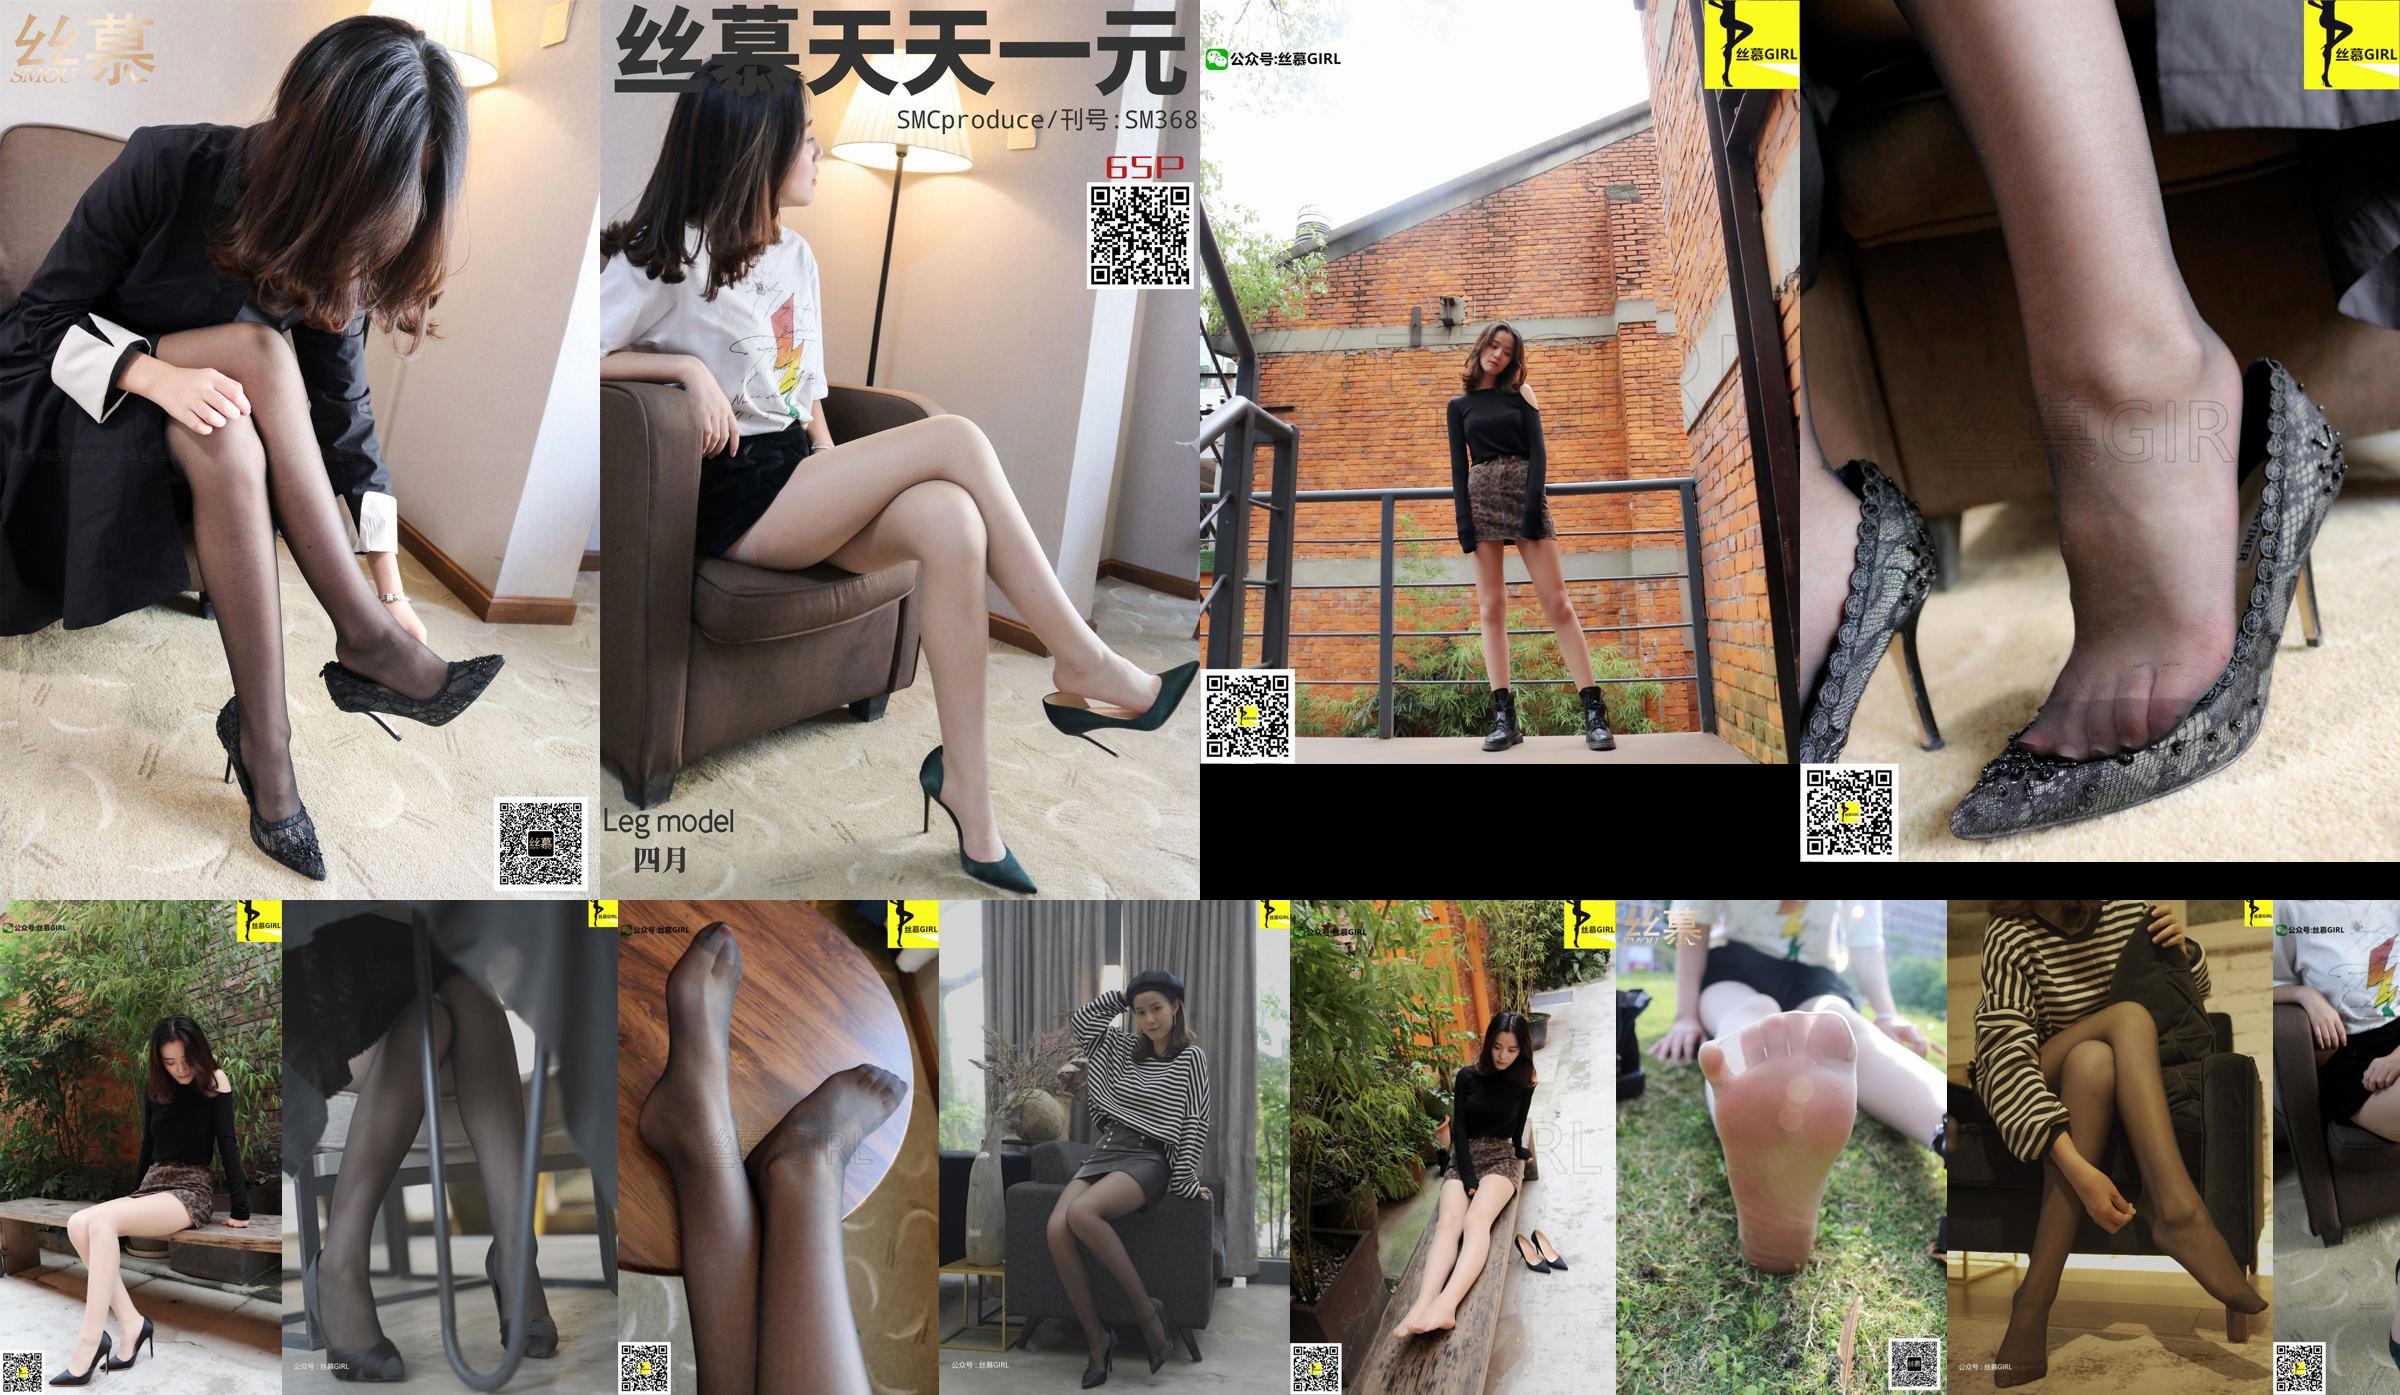 [Simu] SM368 Every Day One Yuan April "Double Silk Review" No.ba0300 Página 1